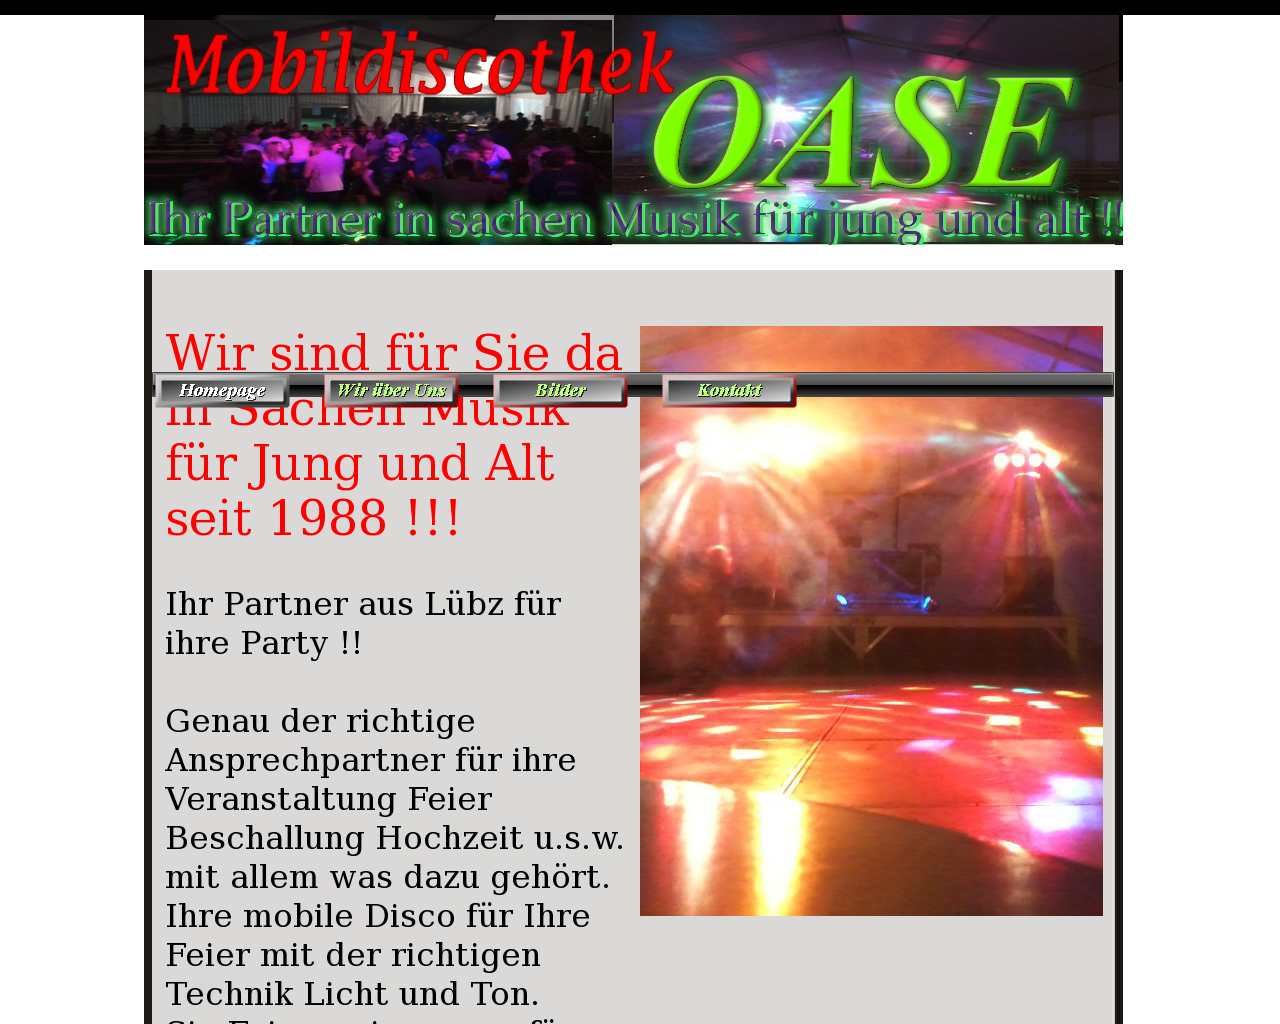 Bild Website oase-disco.de in 1280x1024